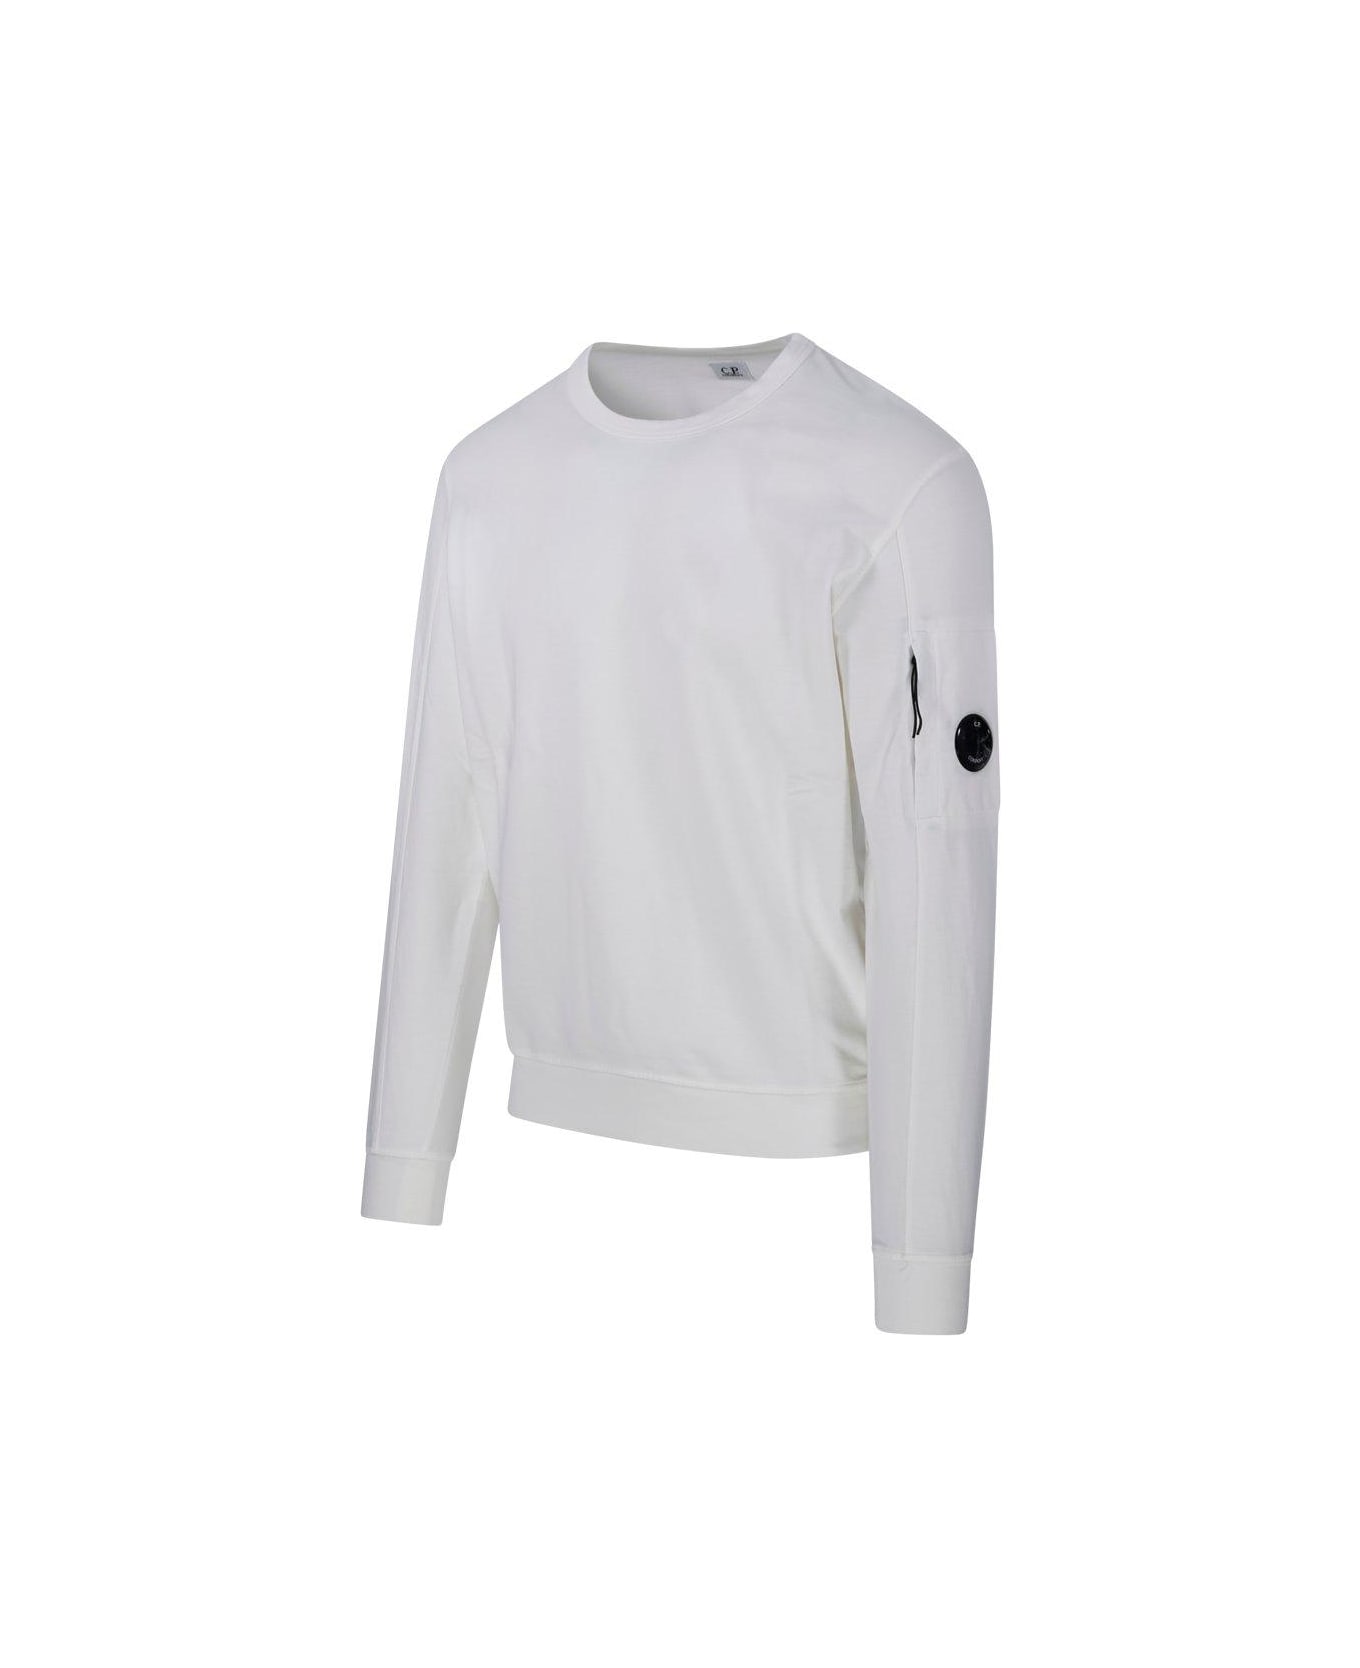 C.P. Company Lens-detailed Crewneck Sweatshirt - Gauze white